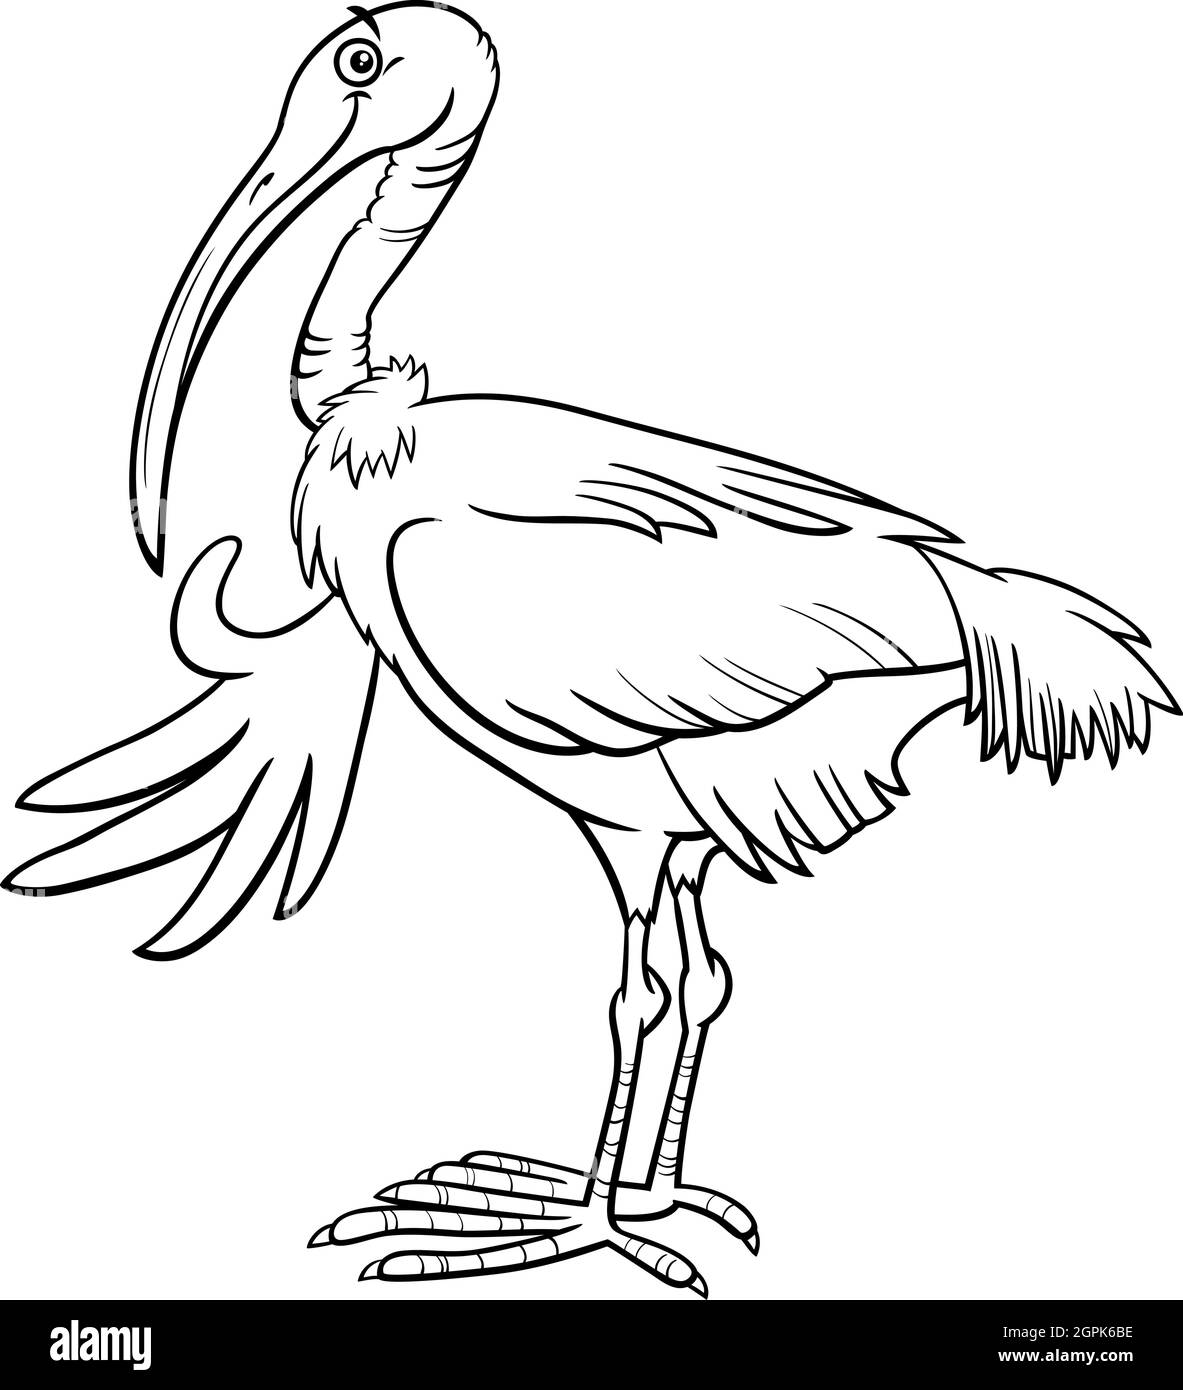 cartoon ibis bird comic animal character coloring book page Stock Vector